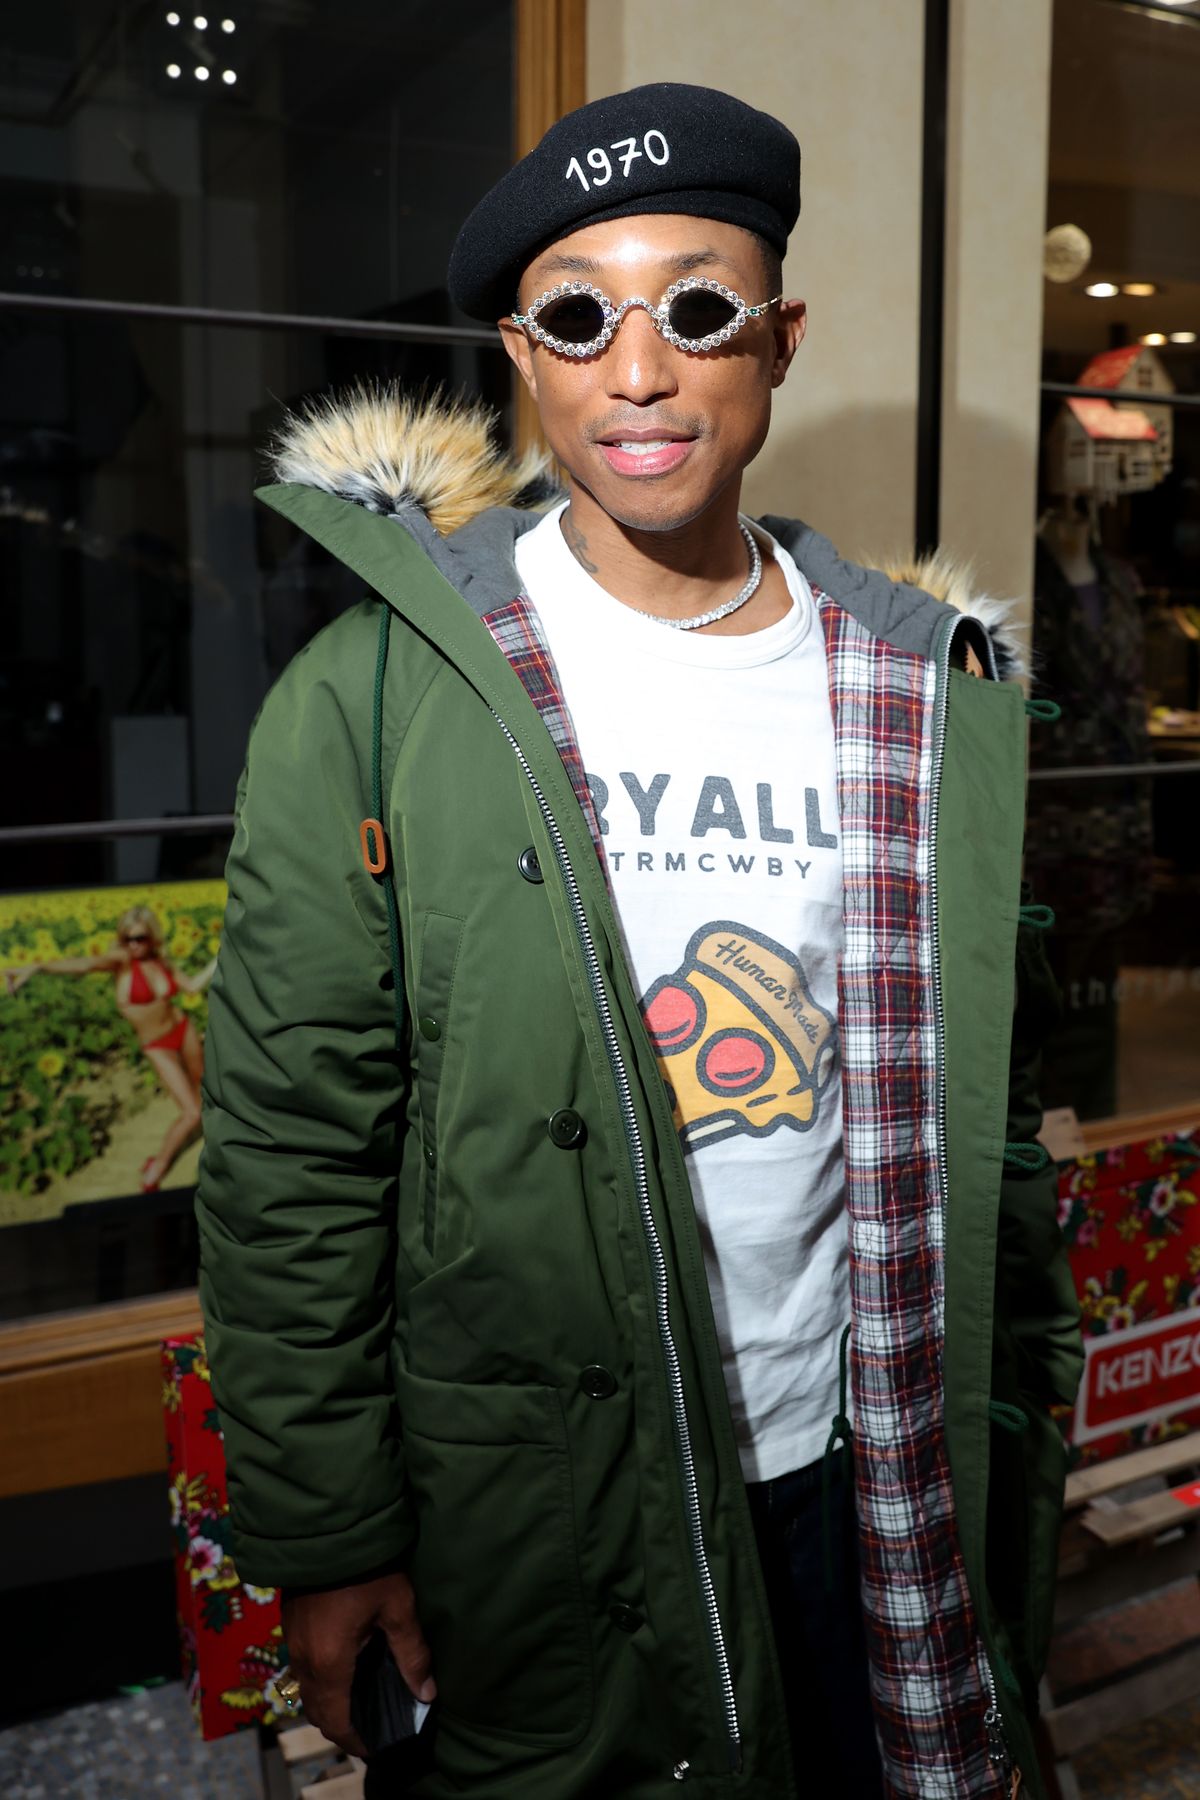 Pharrell Williams X Louis Vuitton Sunglasses Spike in Search Interest – WWD